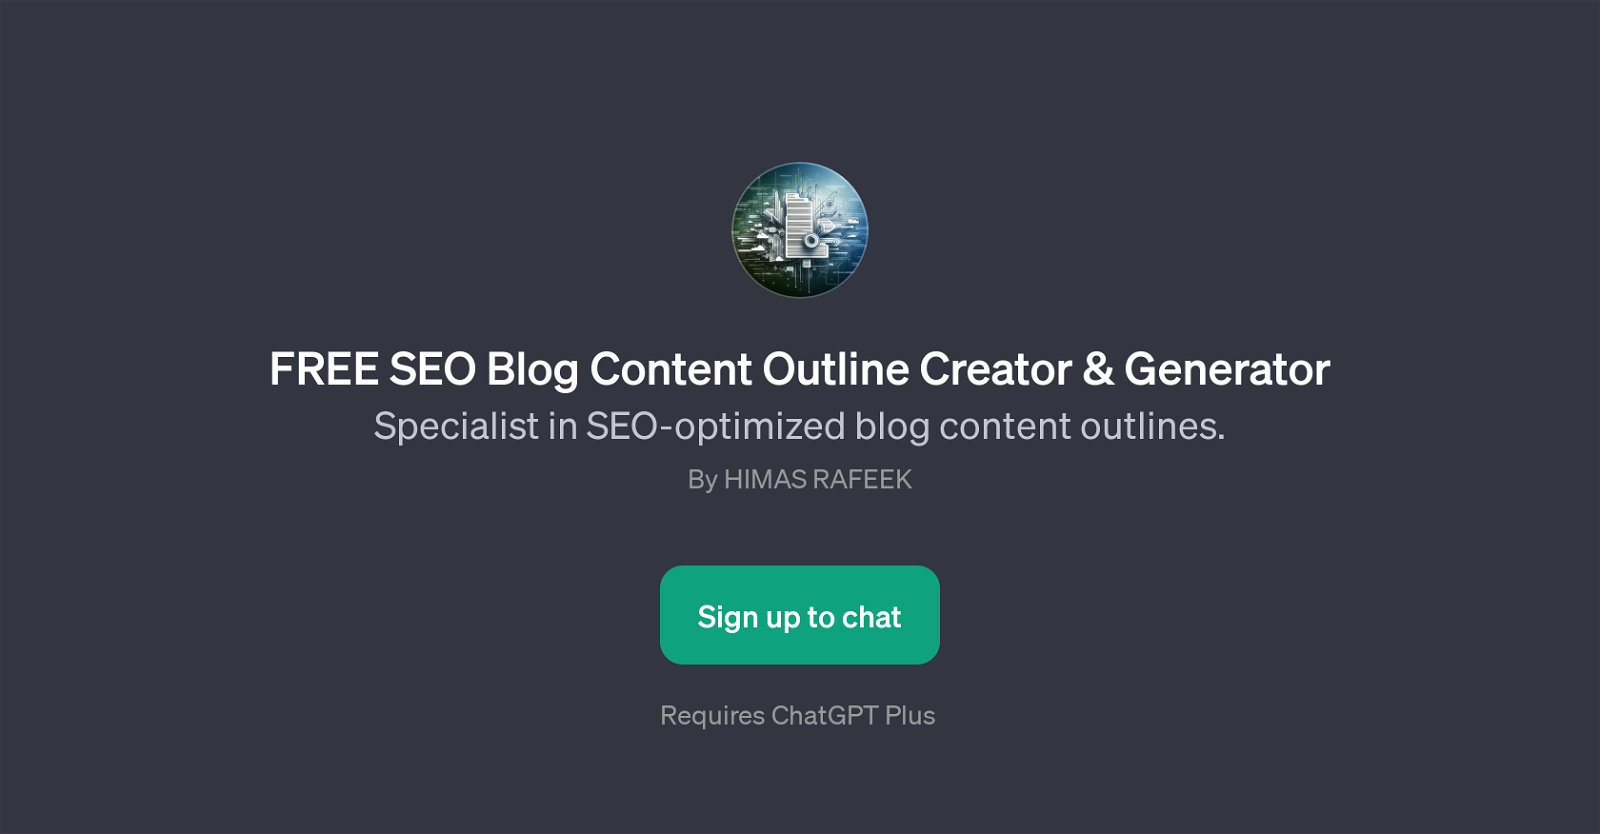 FREE SEO Blog Content Outline Creator & Generator website